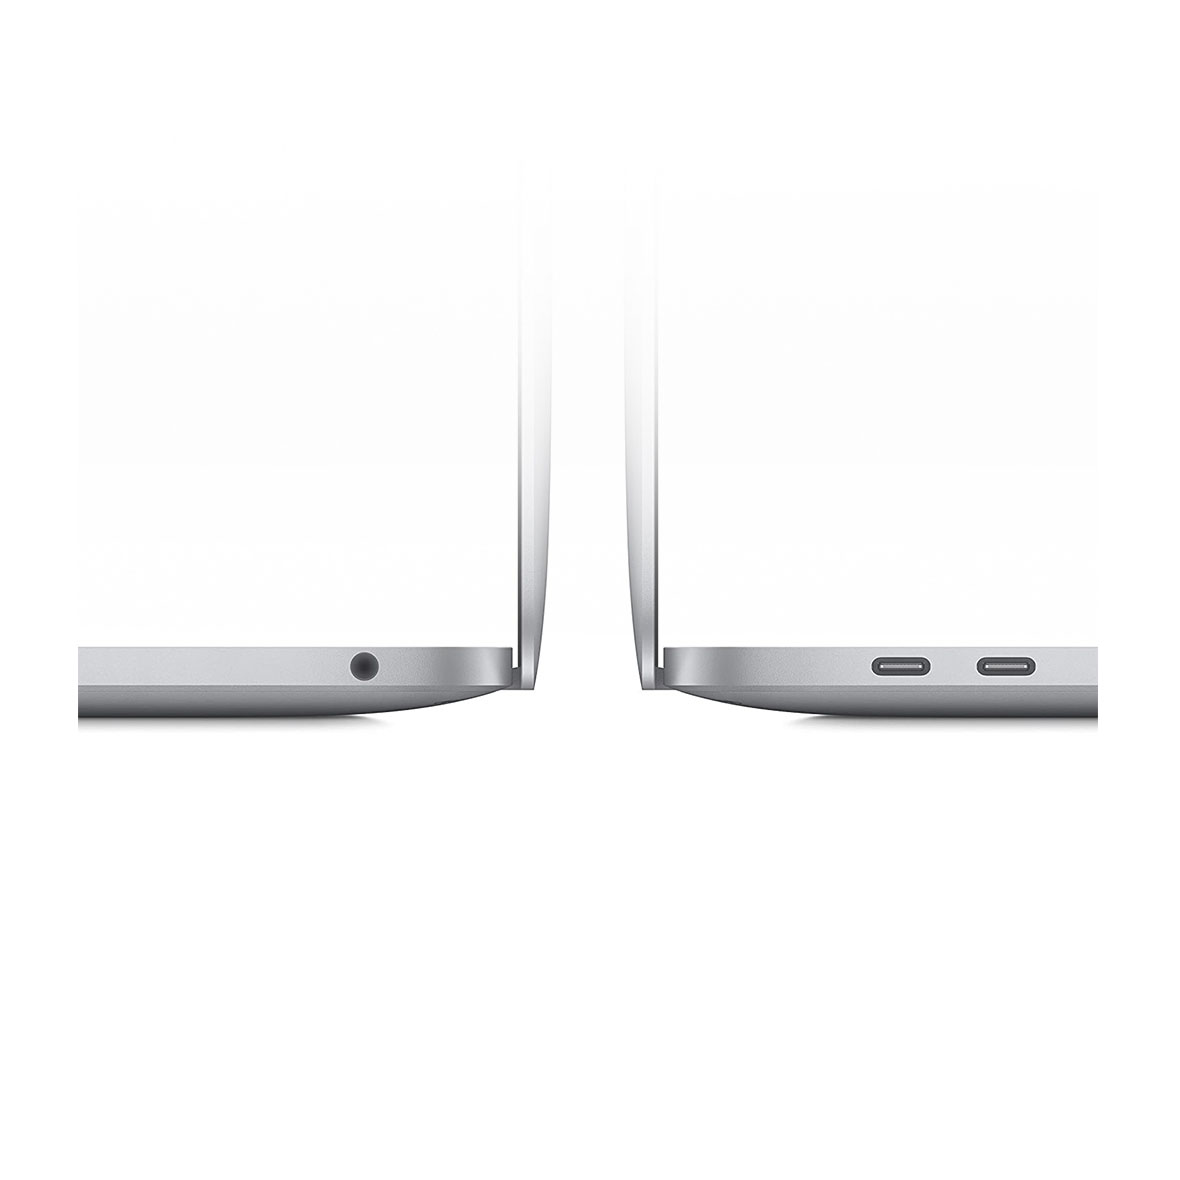 Laptop Apple Macbook Pro (Z11C000CK)/ Space Grey/ Apple M1 (8C CPU, 8C GPU)/ Ram 16GB/ 2TB SSD/ 13.3inch/ Mac OS/ 1Yr